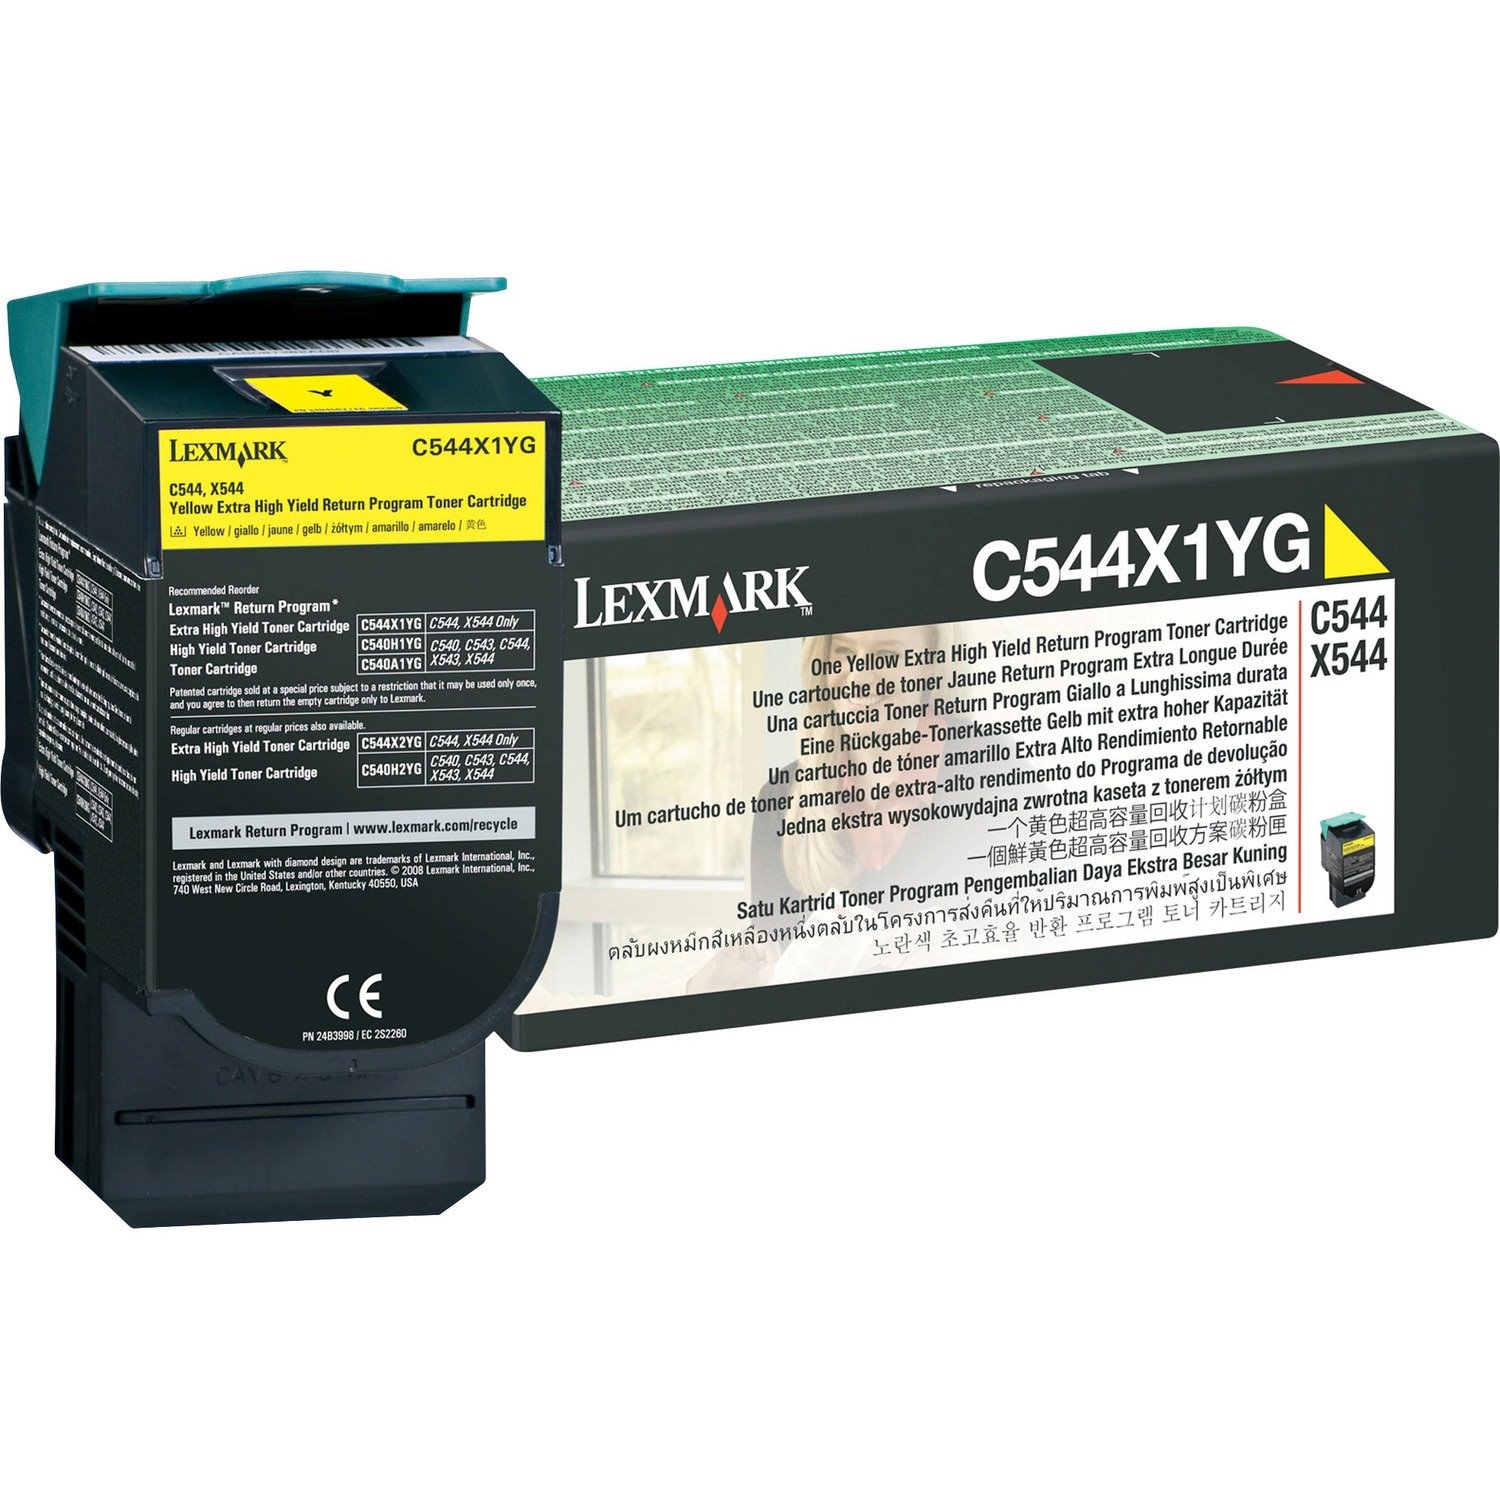 Lexmark C544X1YG Original Toner Cartridge - Yellow